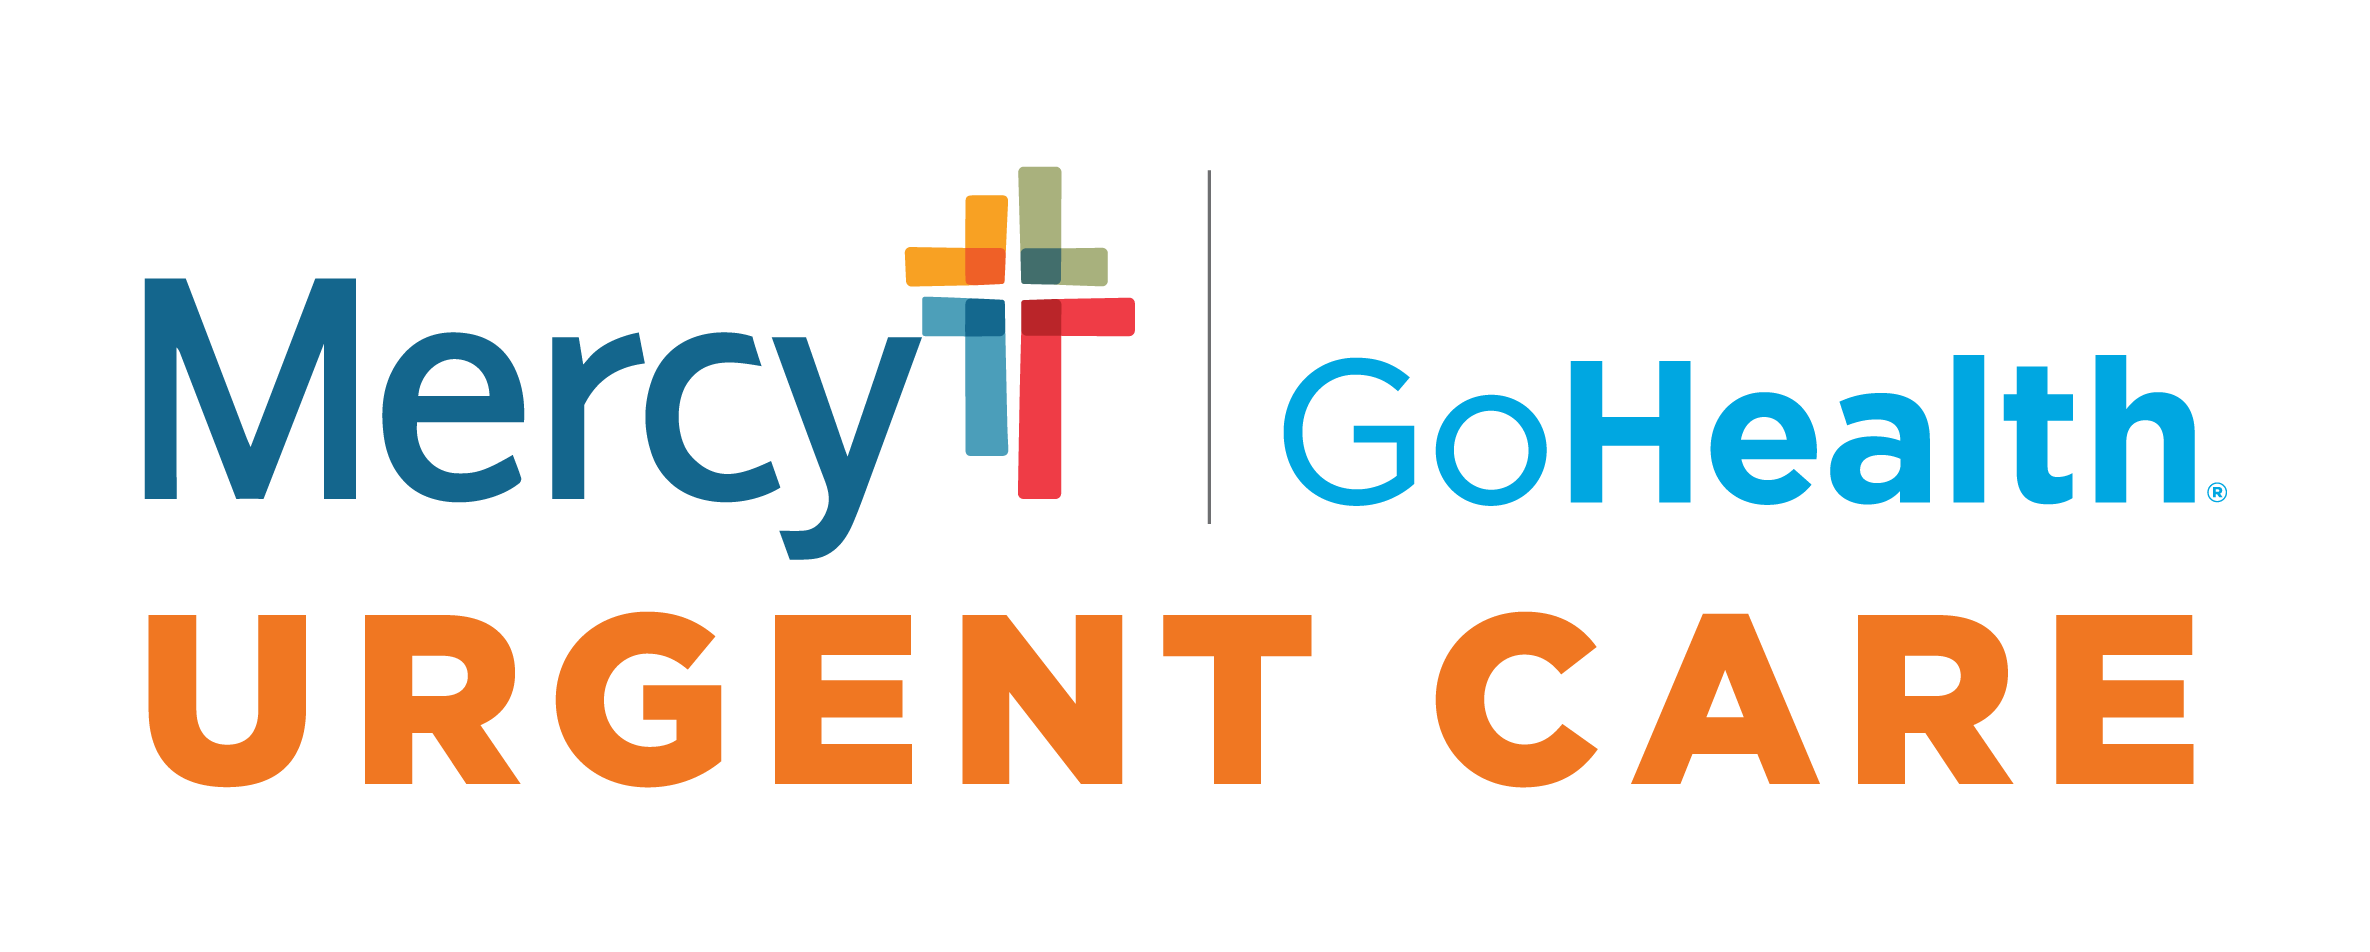 Mercy- GoHealth Urgent Care - Arkansas Virtual Logo